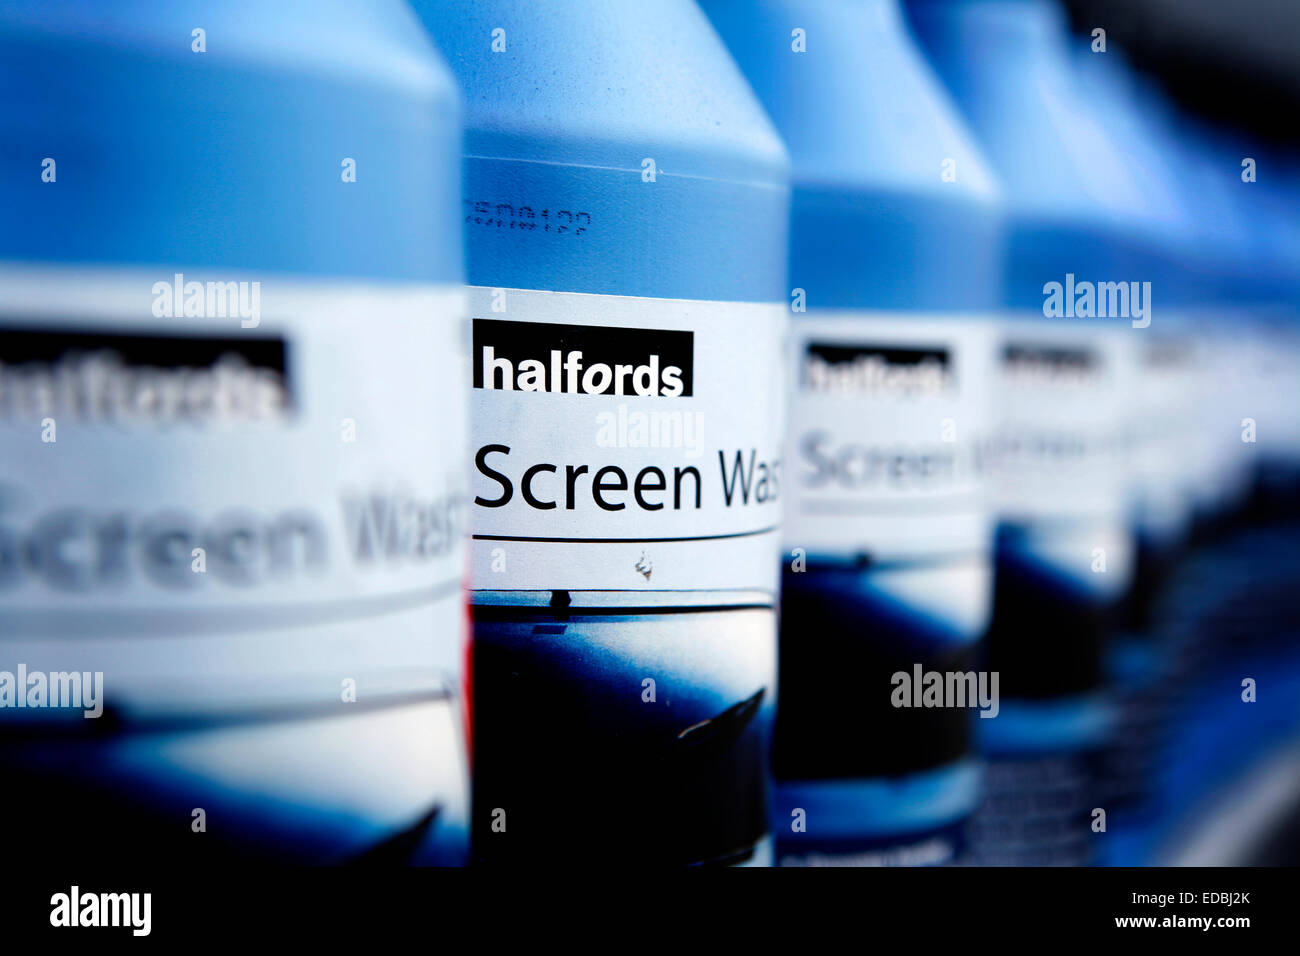 Bottles of Halfords screen wash fluids. Stock Photo